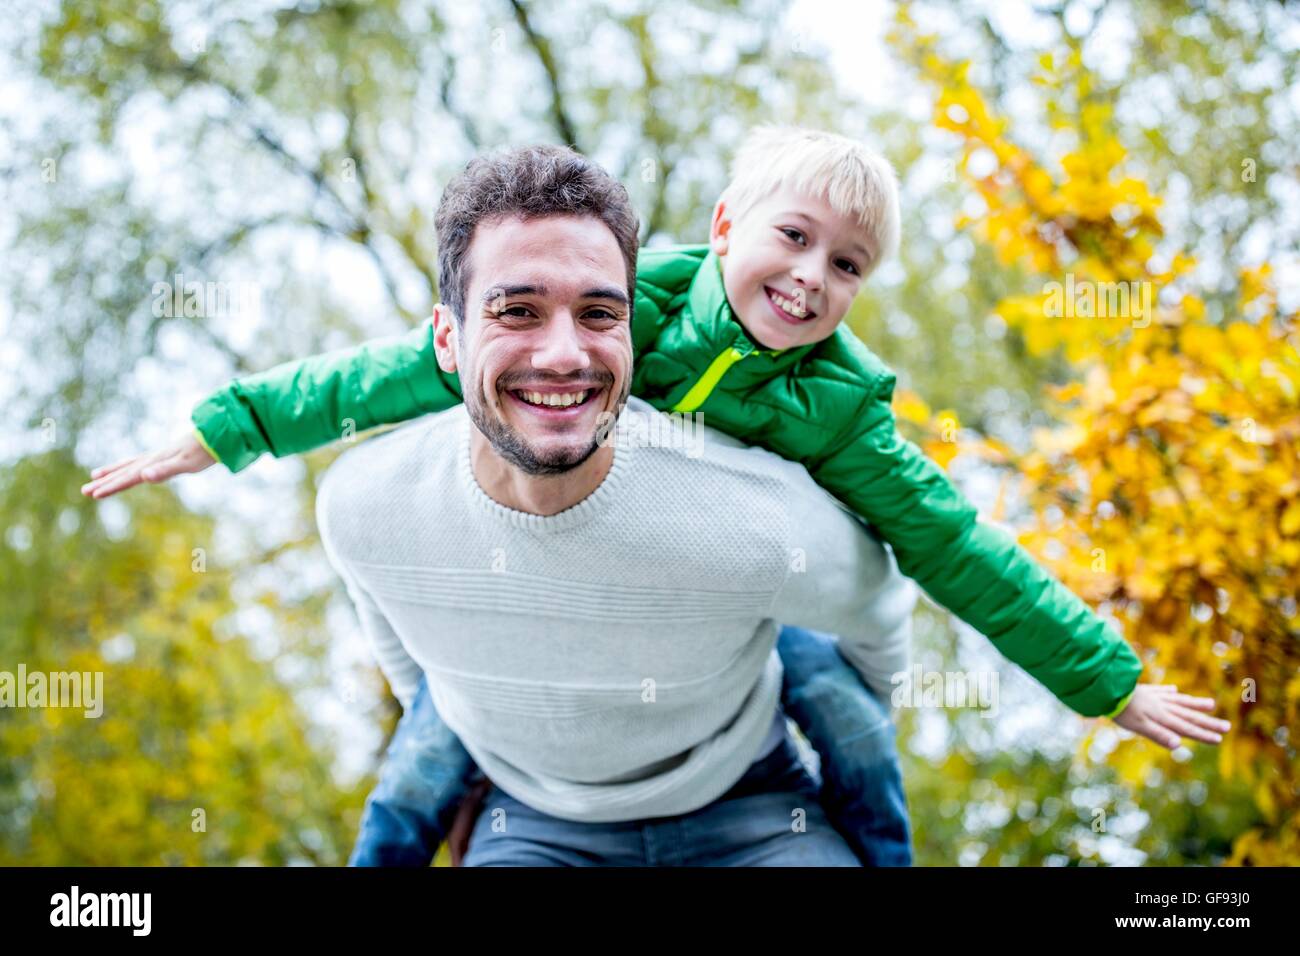 -MODELL VERÖFFENTLICHT. Vater mit Sohn Huckepack im Herbst, Lächeln, Porträt. Stockfoto